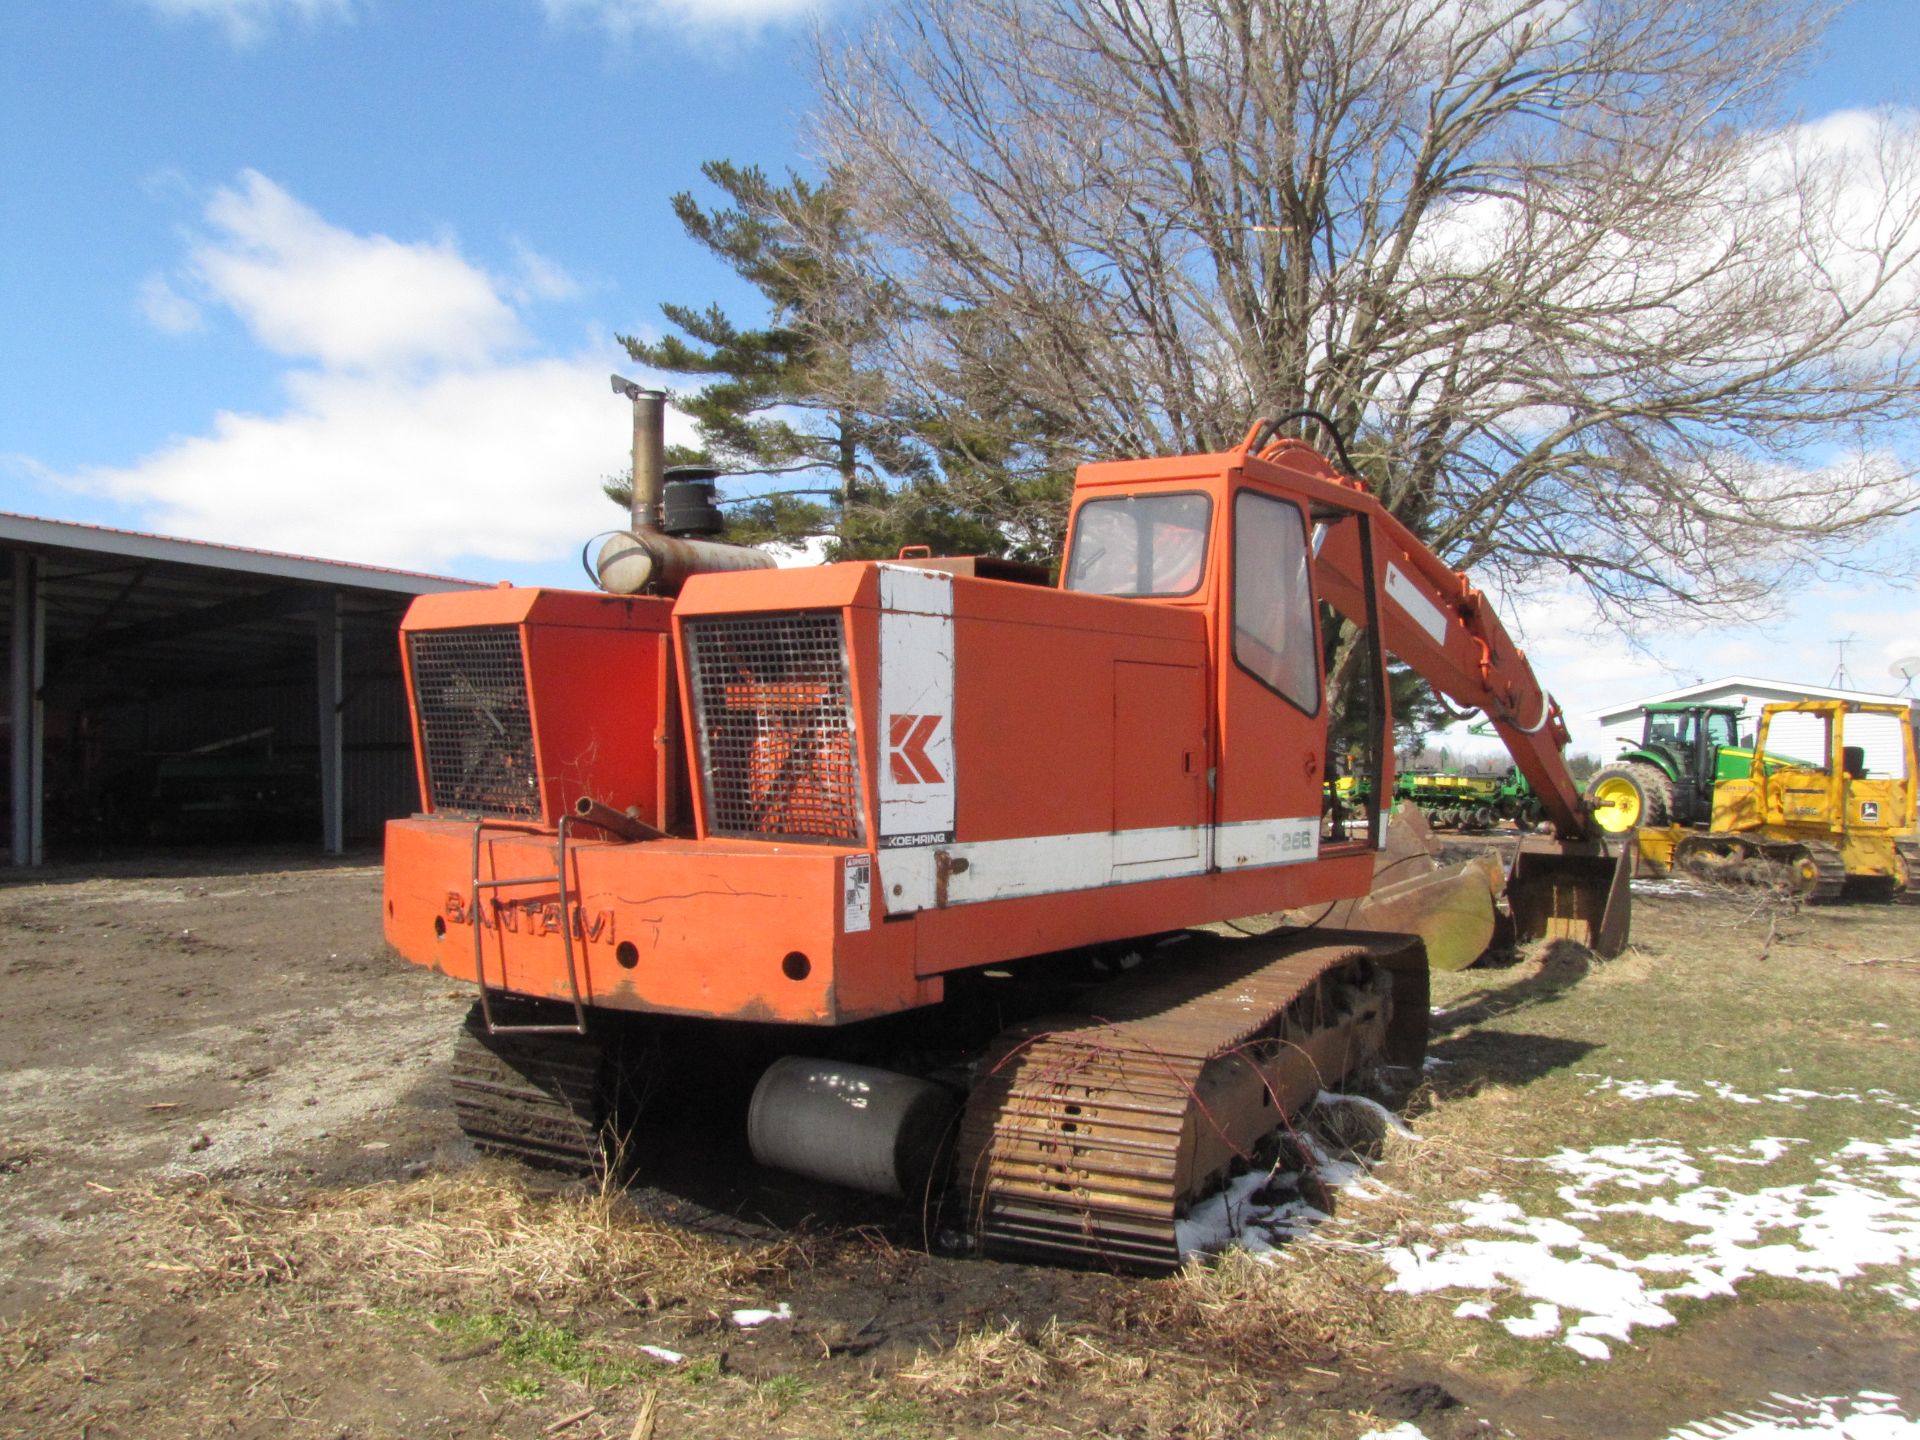 Bantam Koehring C-266 excavator - Image 4 of 39